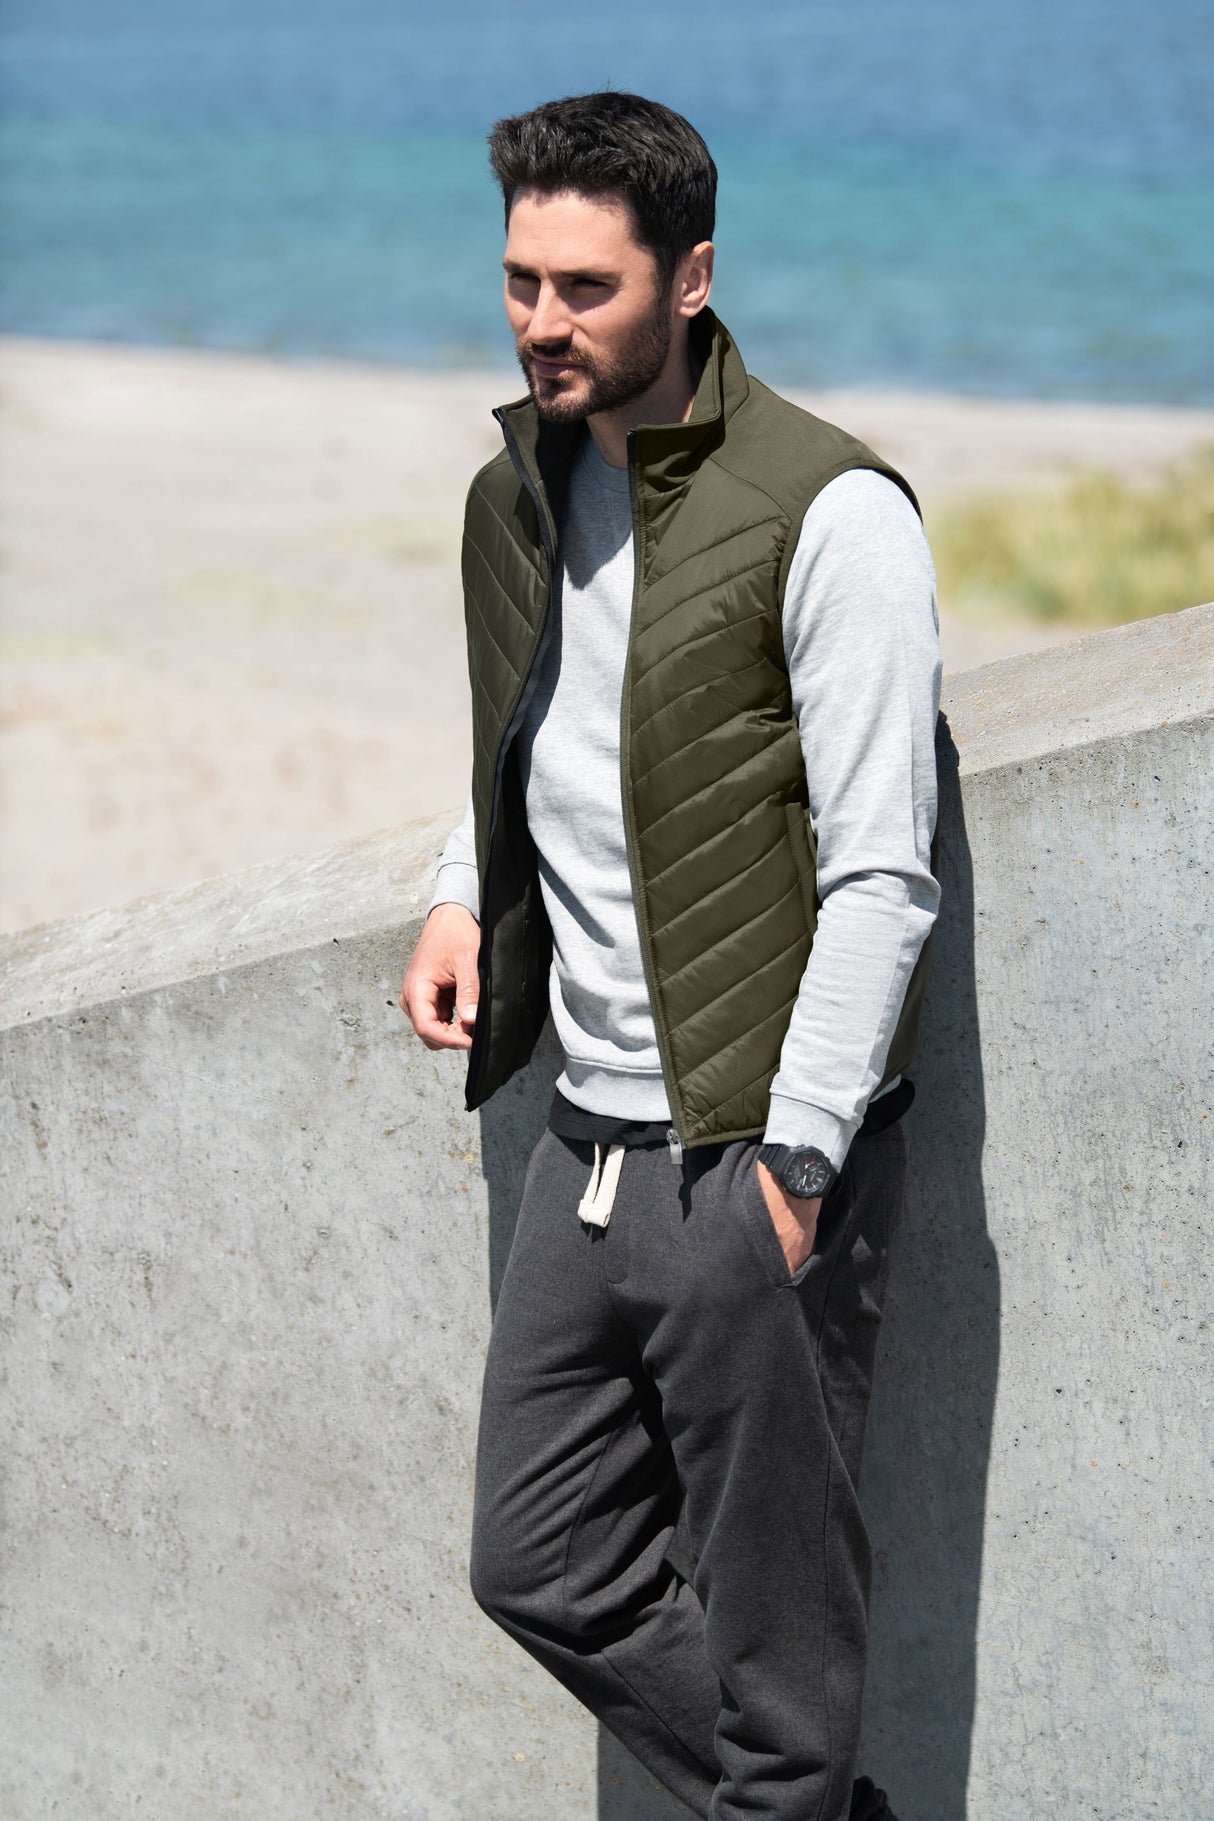 Nimbus Play Benton – Versatile Hybrid Vest